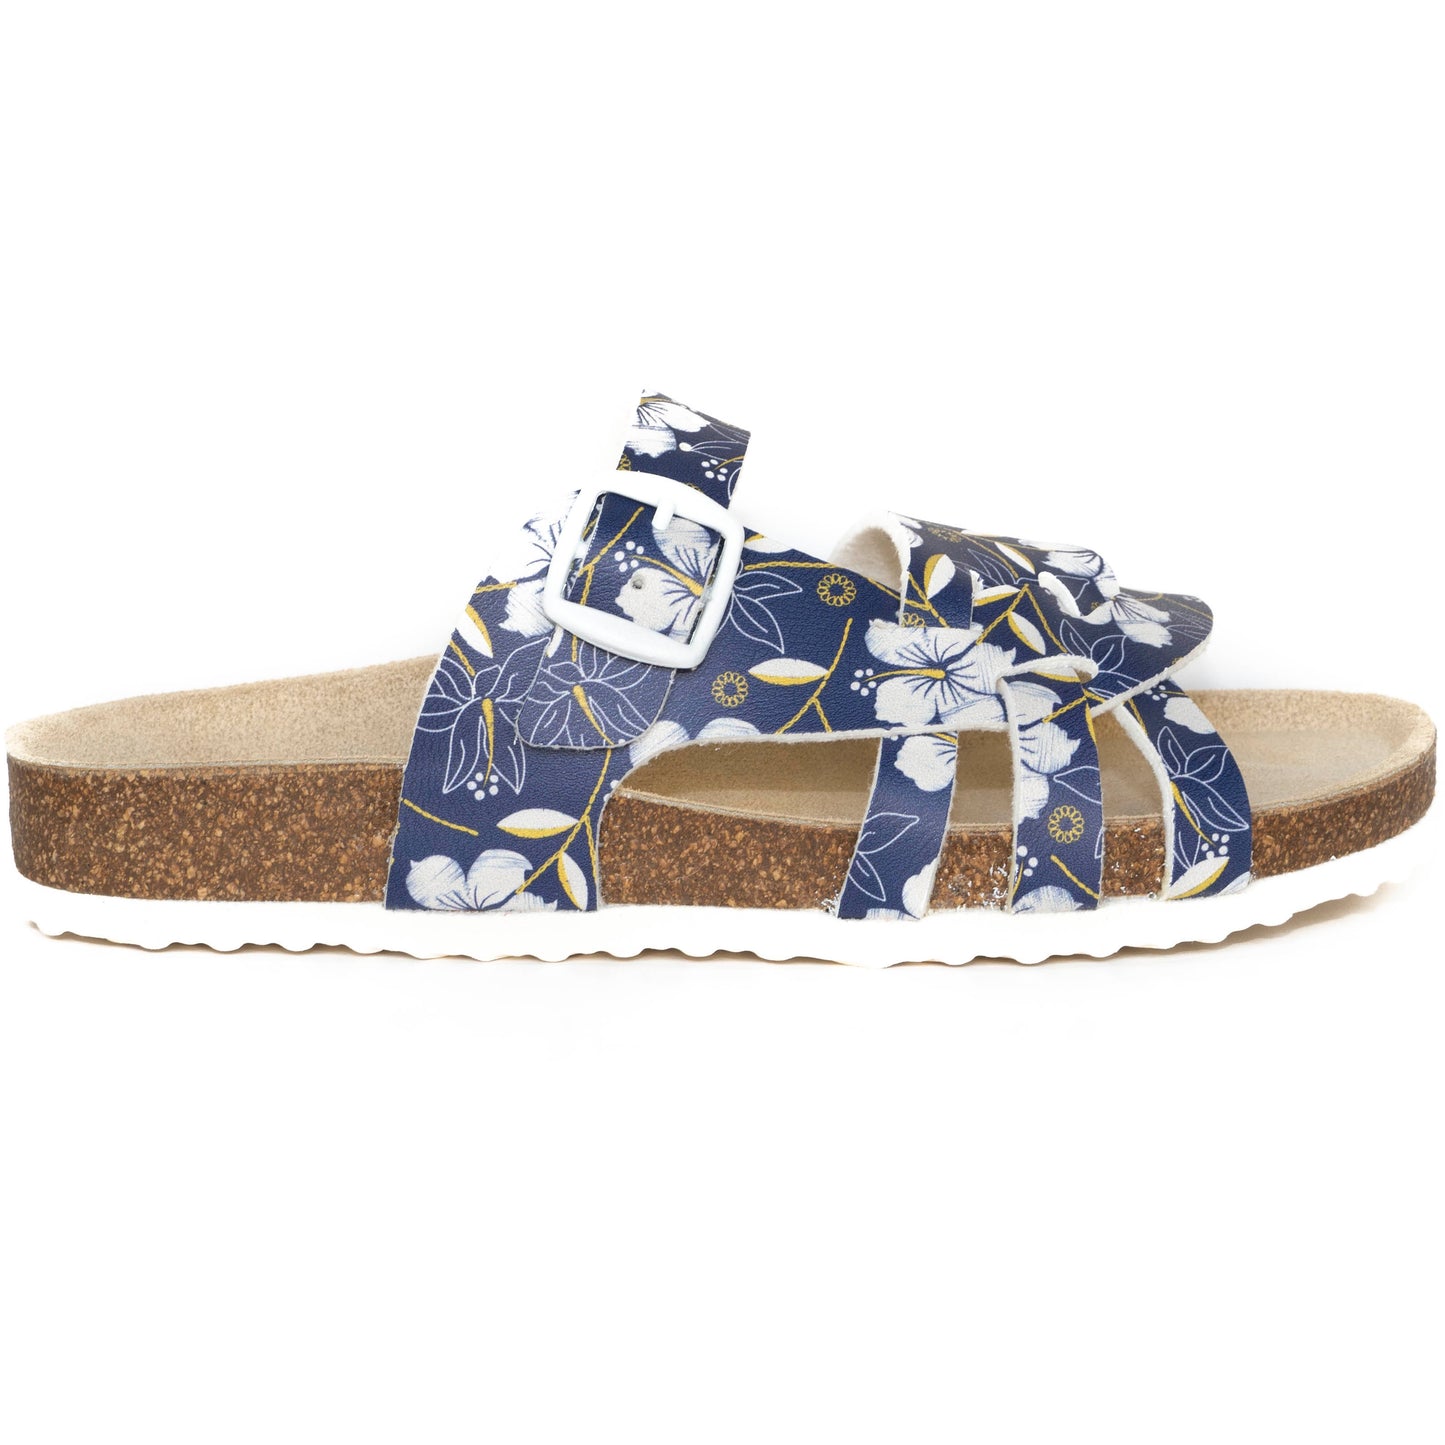 T90: colour 96- white blue ladies orthotic sandals